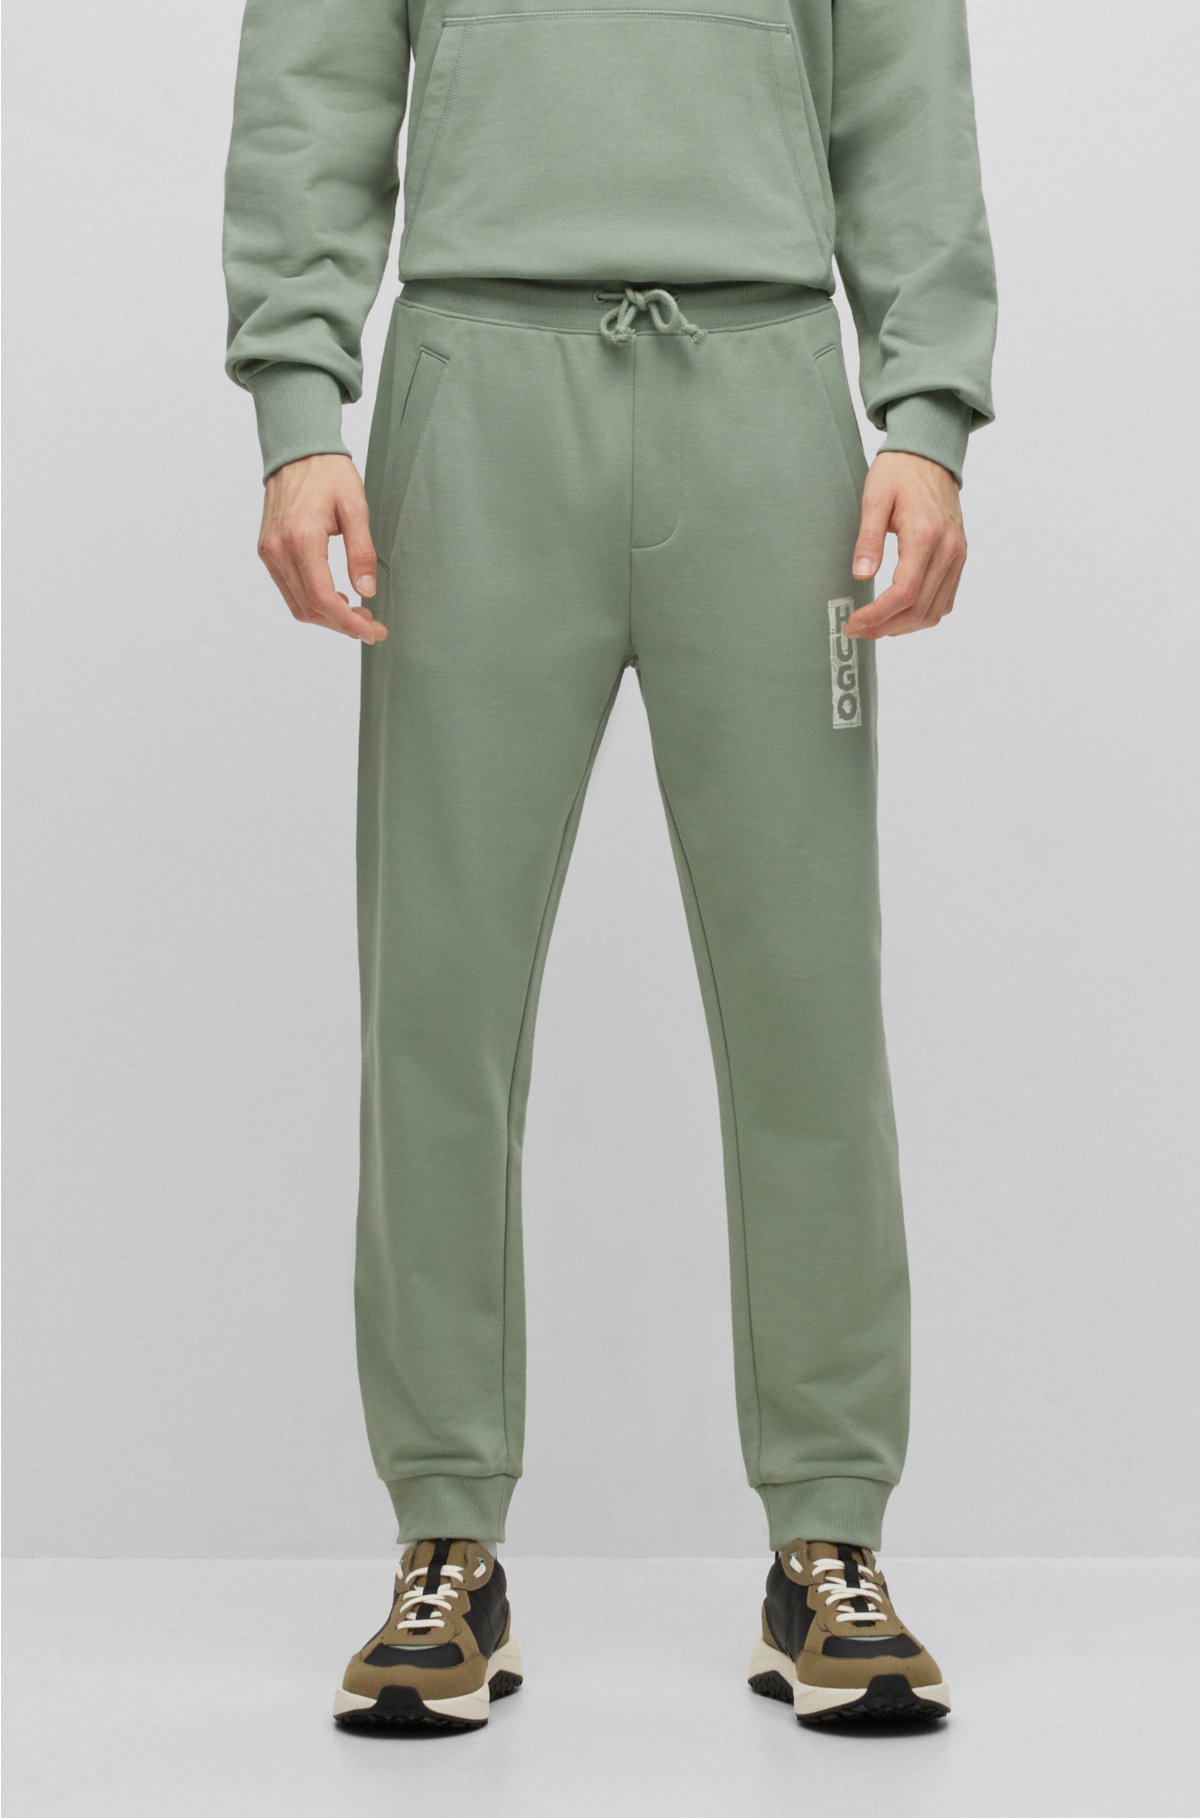 Relaxed Fit Sweatpants - Light khaki green - Men